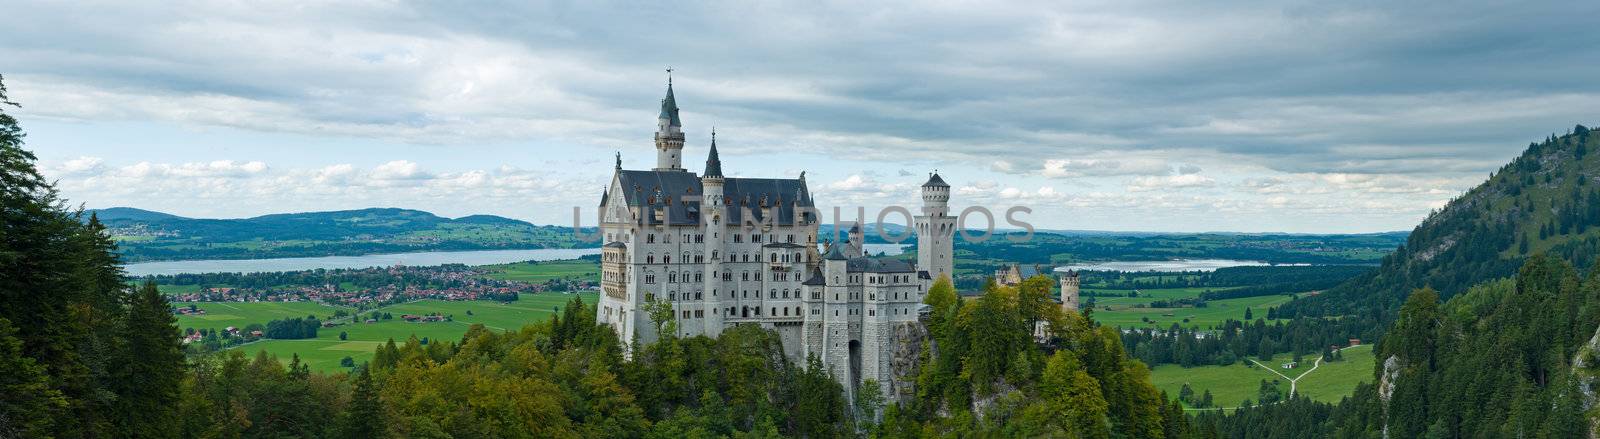 Castle Neuschwanstein with surrounding landscape by 3523Studio